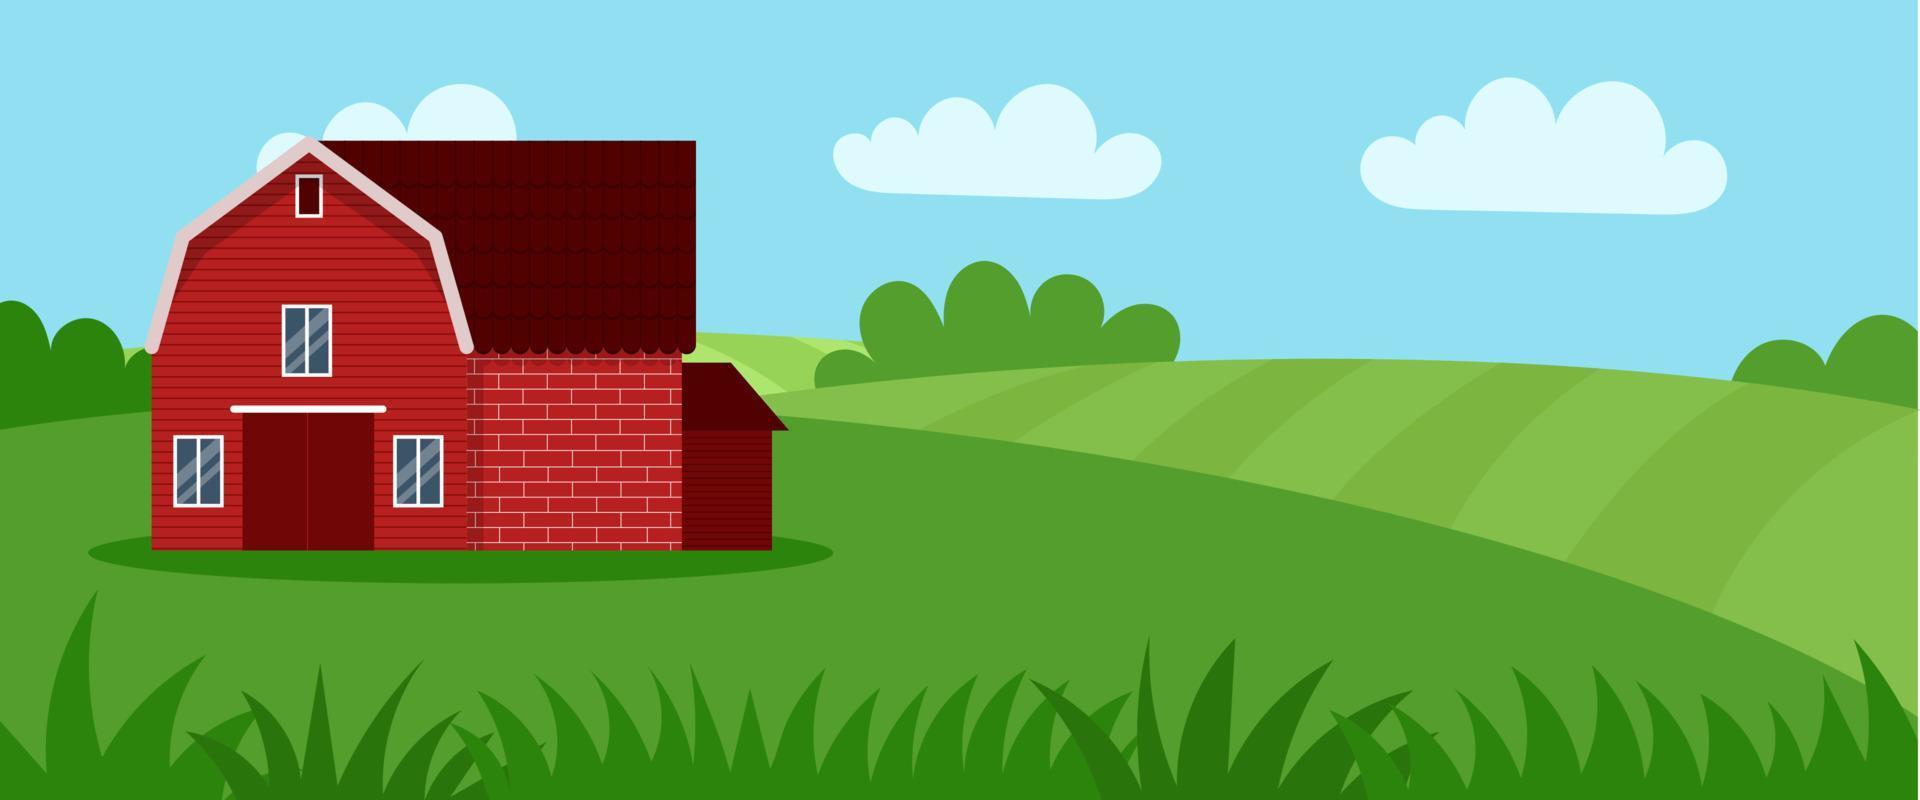 casa de campo en un prado verde, construcción agrícola. ilustración de vector plano sobre un fondo de cielo azul con nubes.campo de panorama de paisaje rural de dibujos animados.banner para sitio web